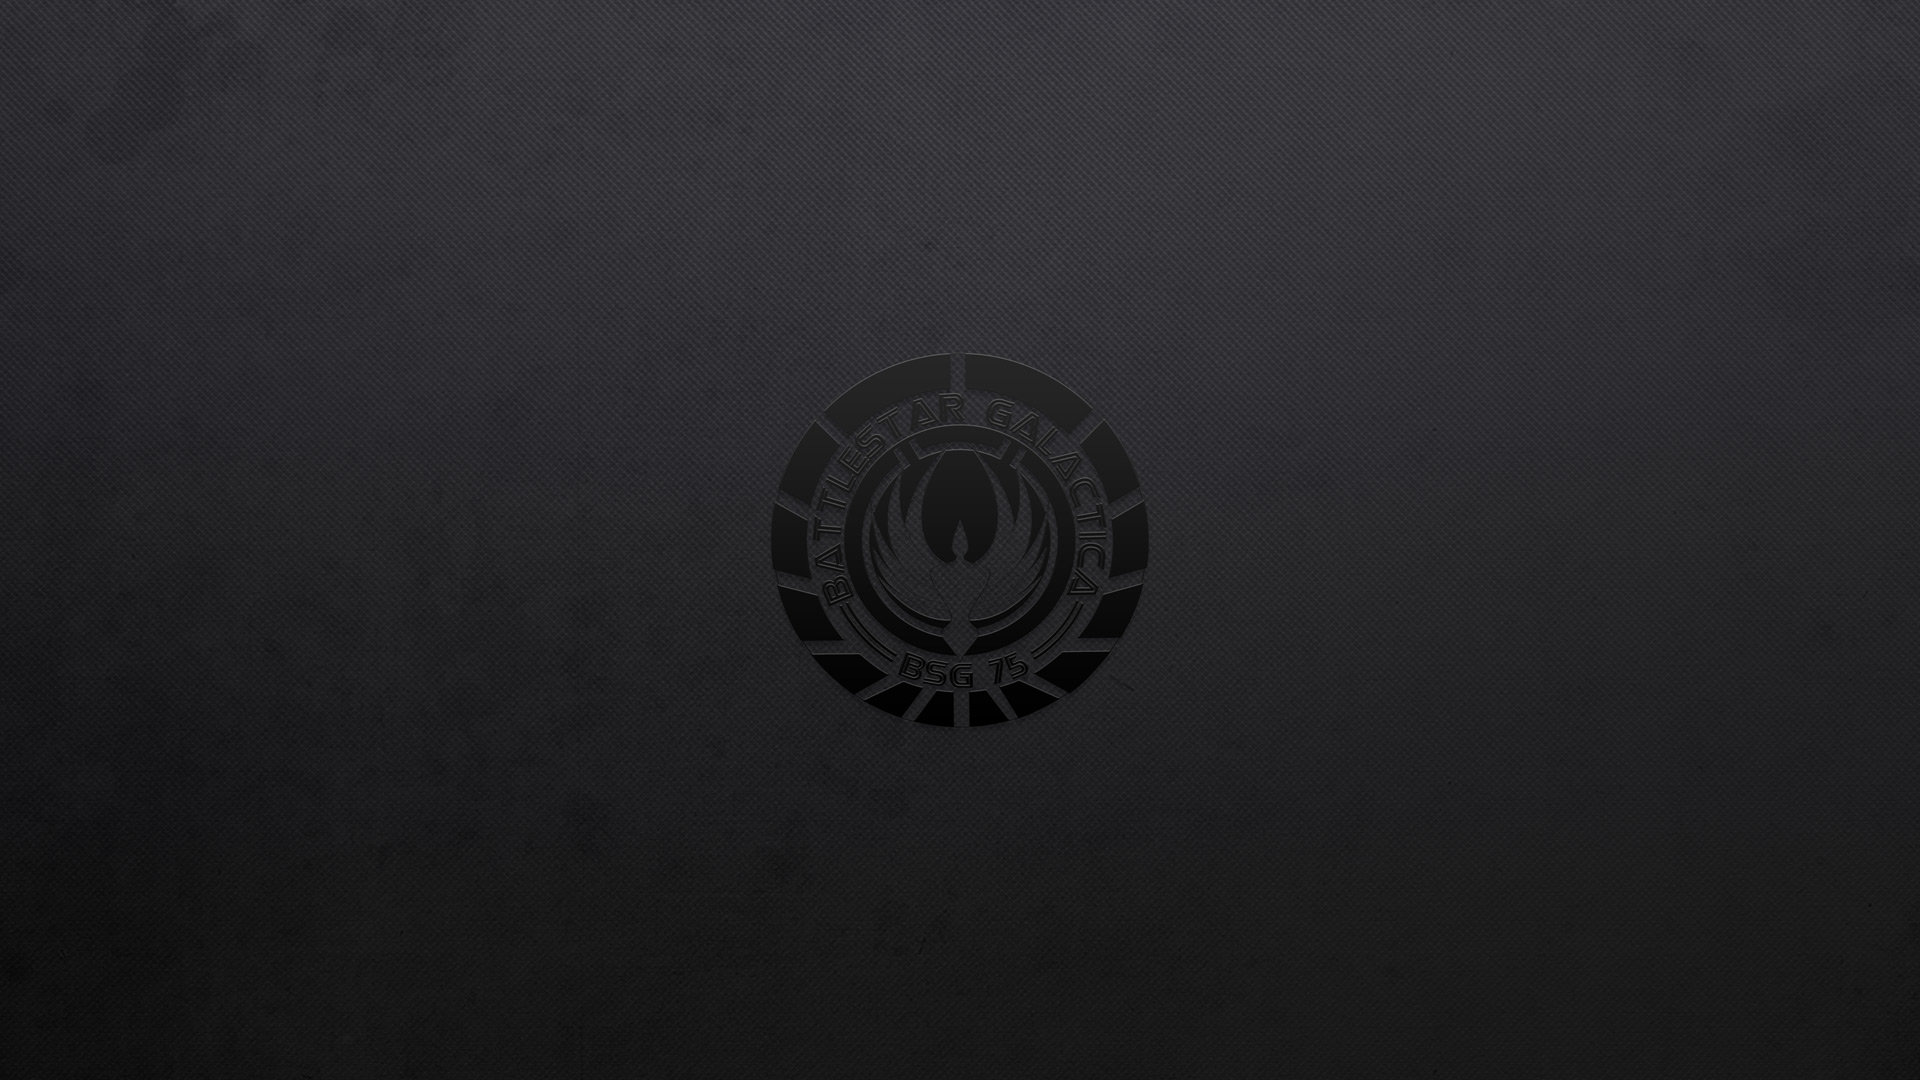 Free download Battlestar Galactica serial background ID:122836 hd 1080p for desktop